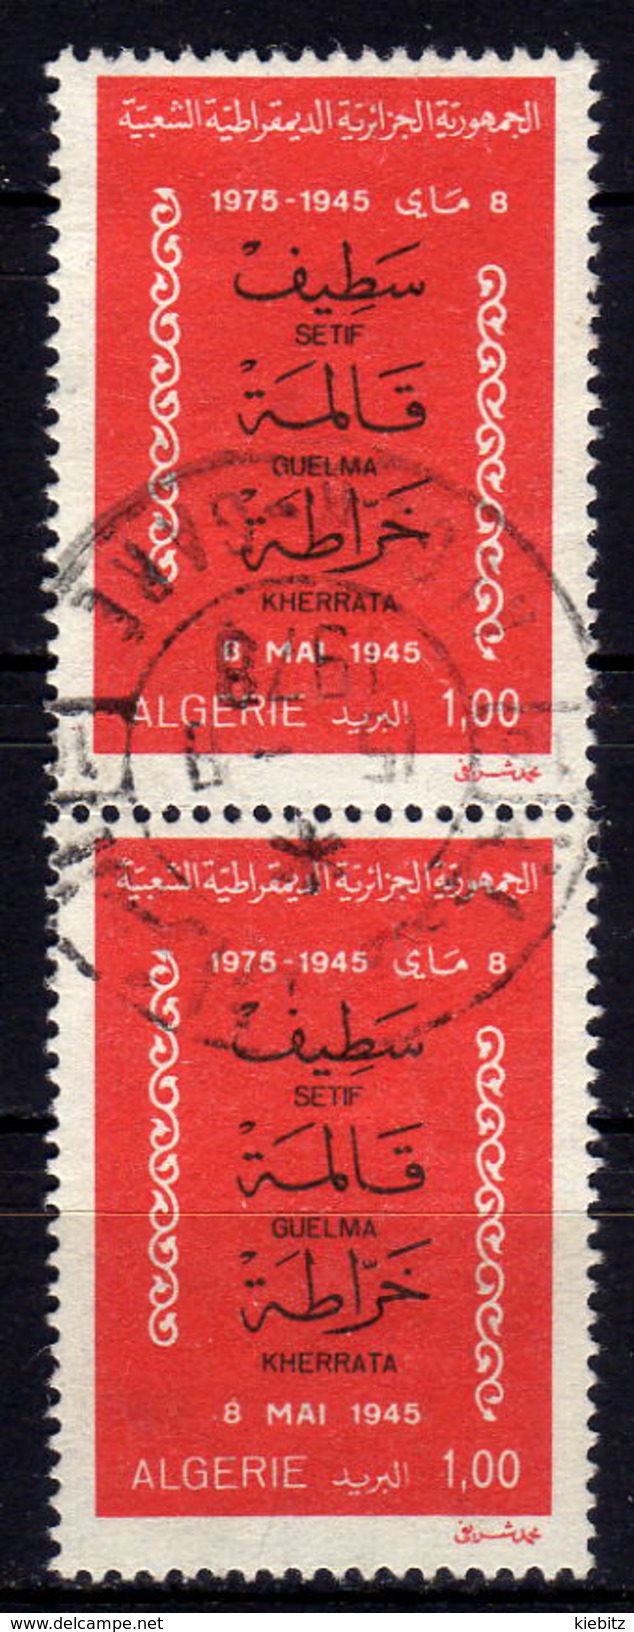 ALGERIEN 1975 - MiNr: 667 Paar  Used - Algerien (1962-...)